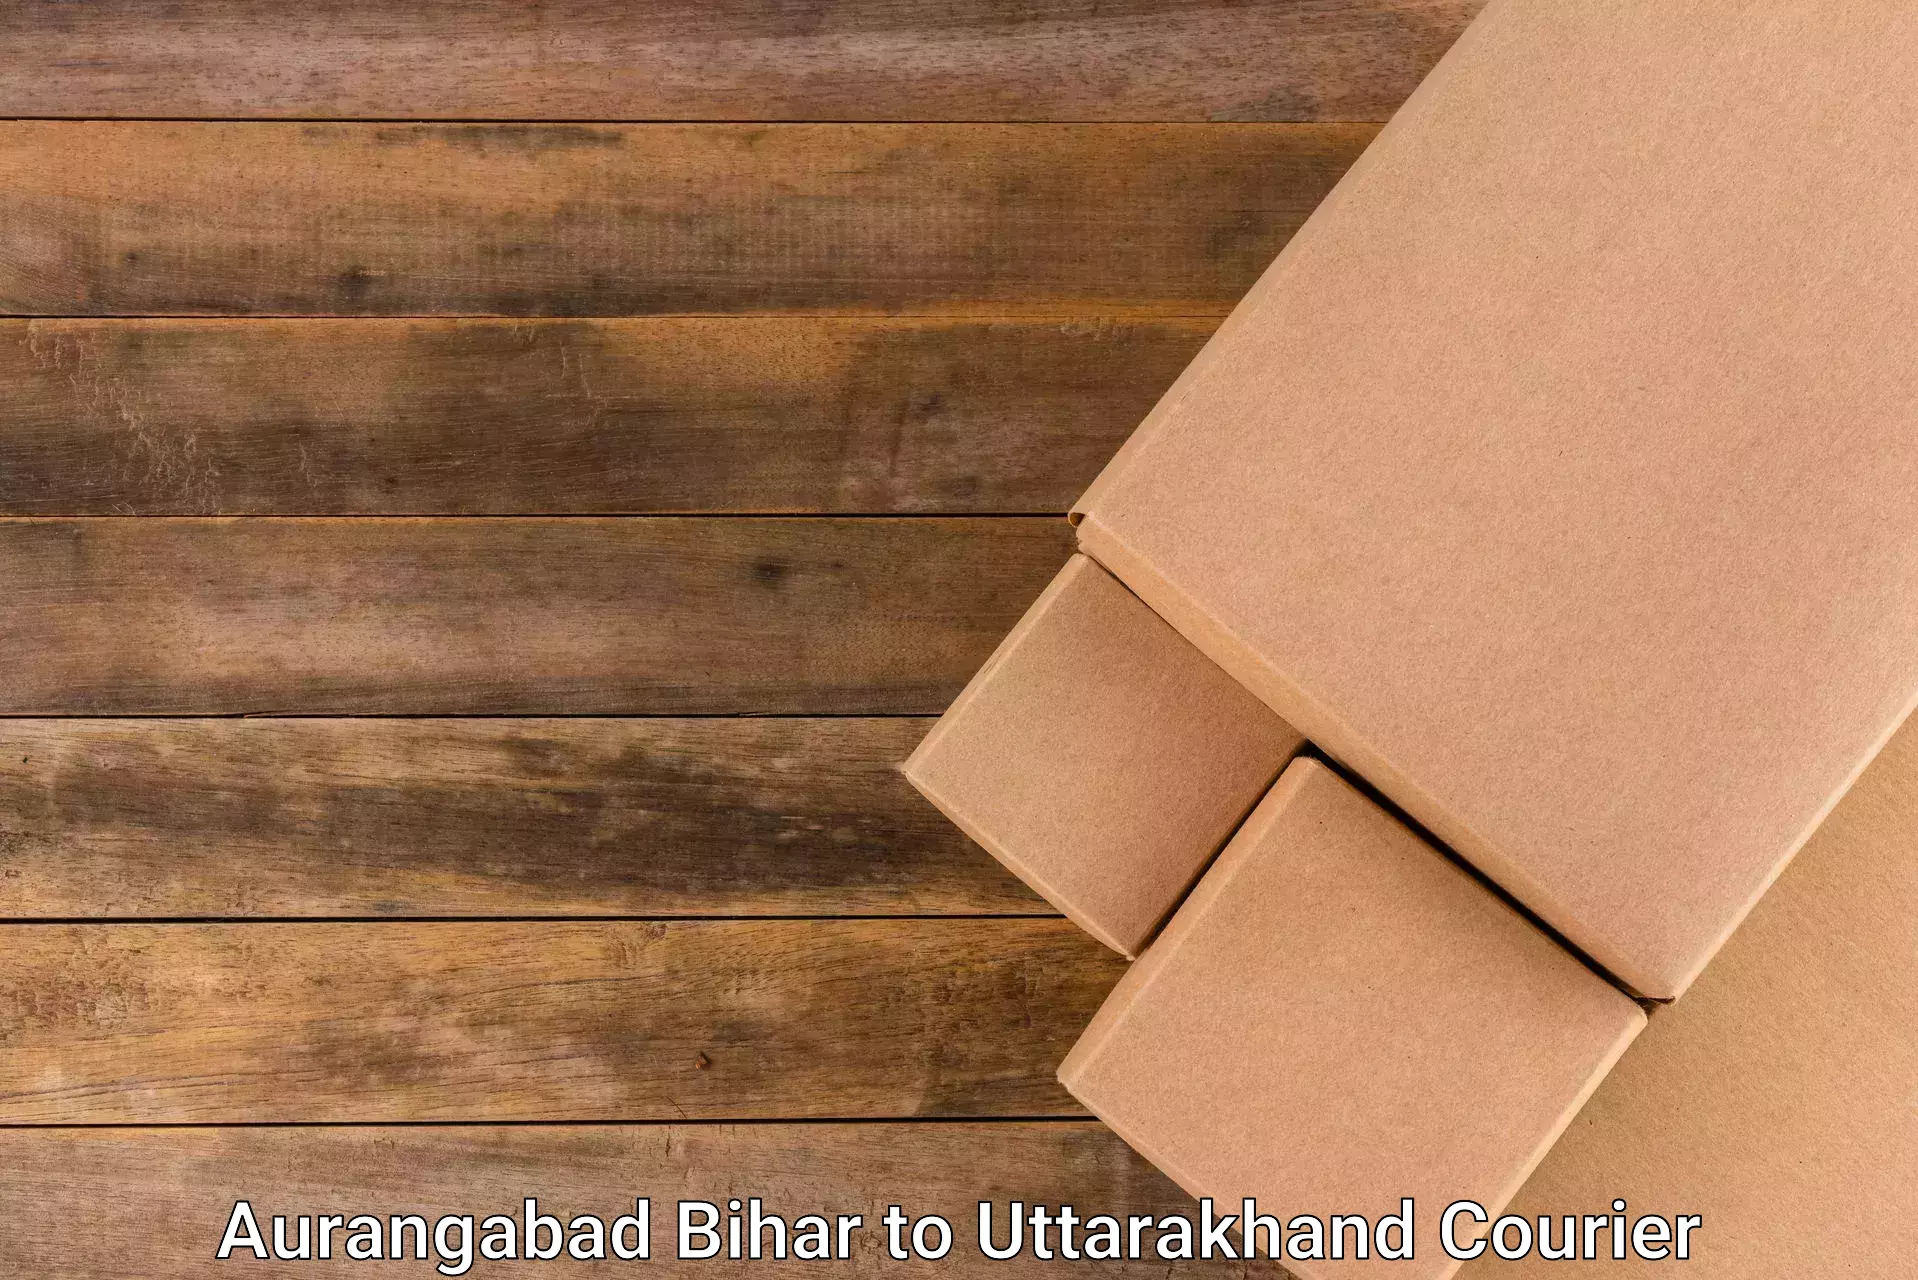 Tech-enabled shipping Aurangabad Bihar to Khatima